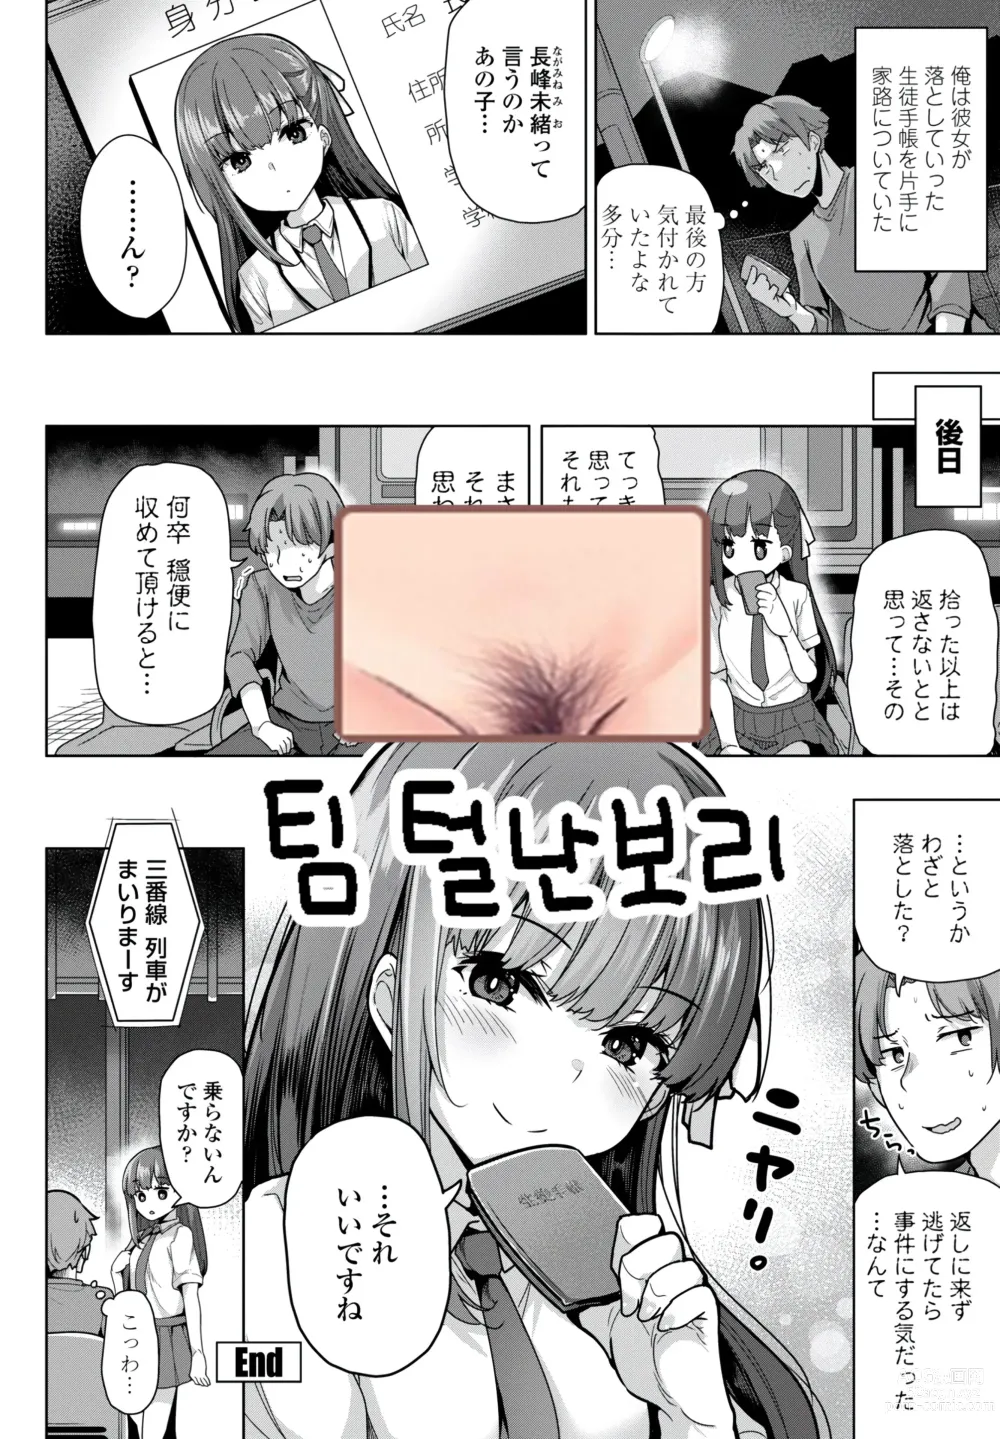 Page 21 of manga Masaguuru